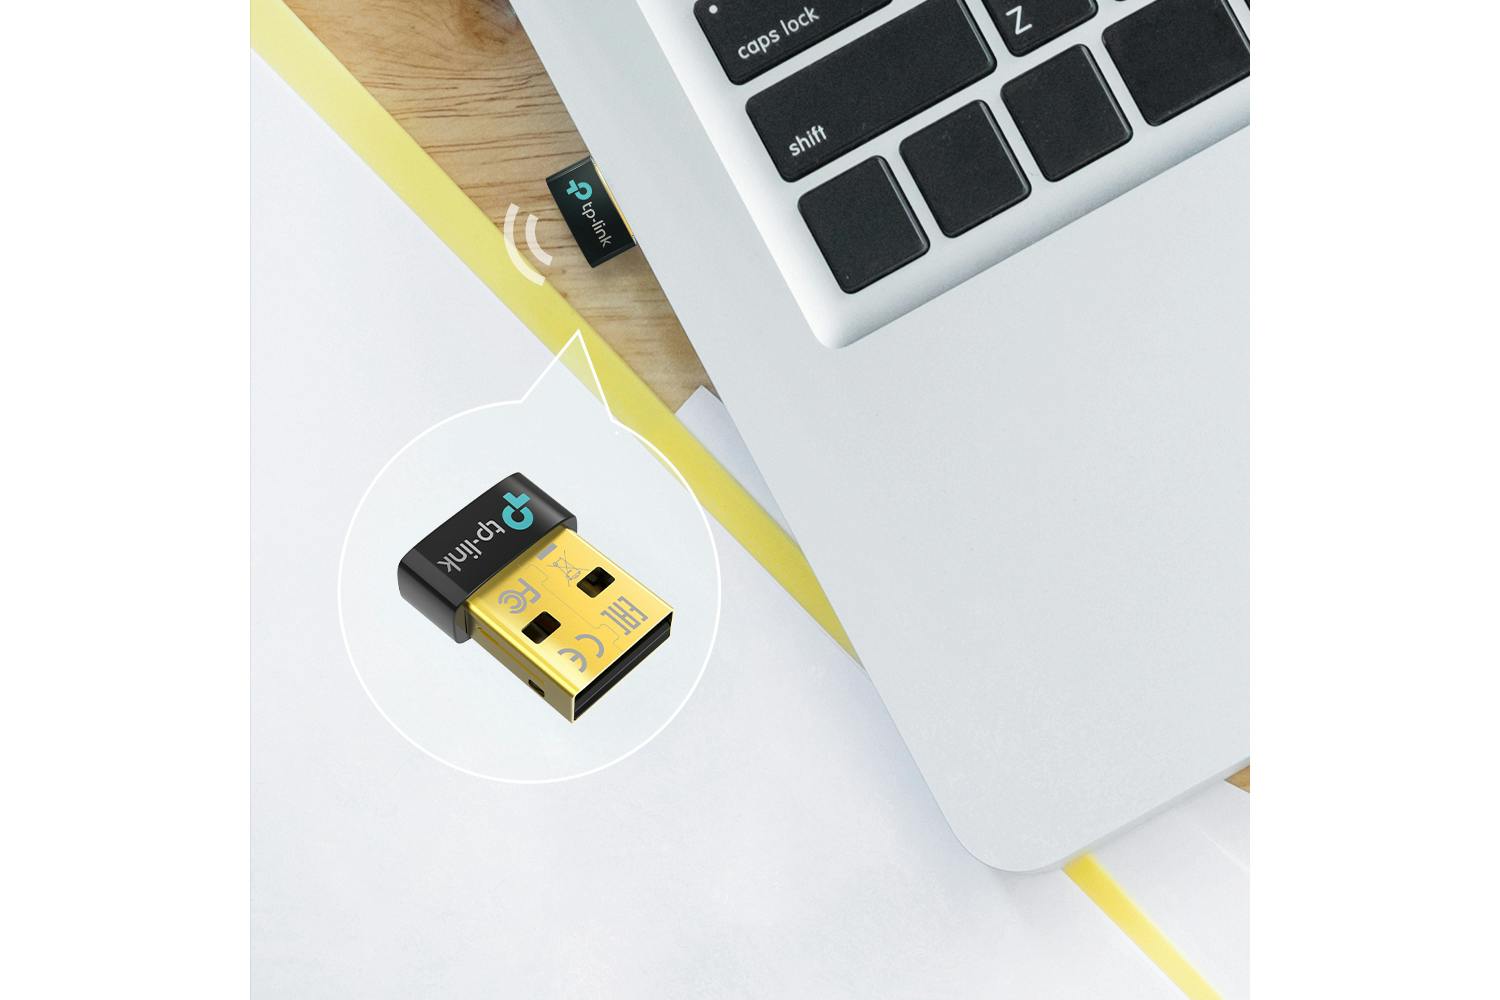 TP-Link Bluetooth 5.0 Nano USB Adapter